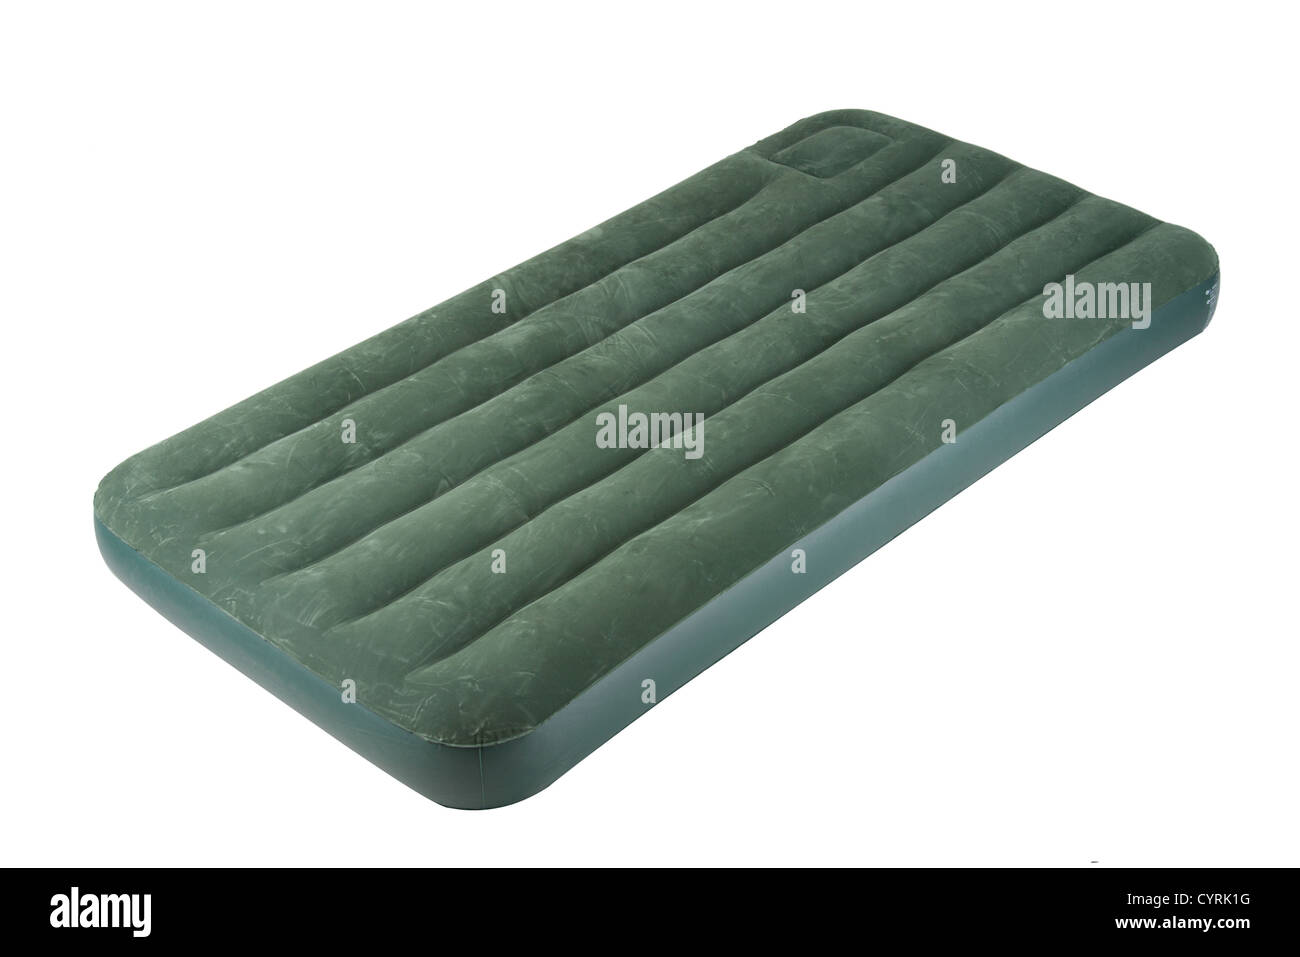 NEW Intex Single Air Bed Camping Festival Mattress Bed Built In Footpump Green 